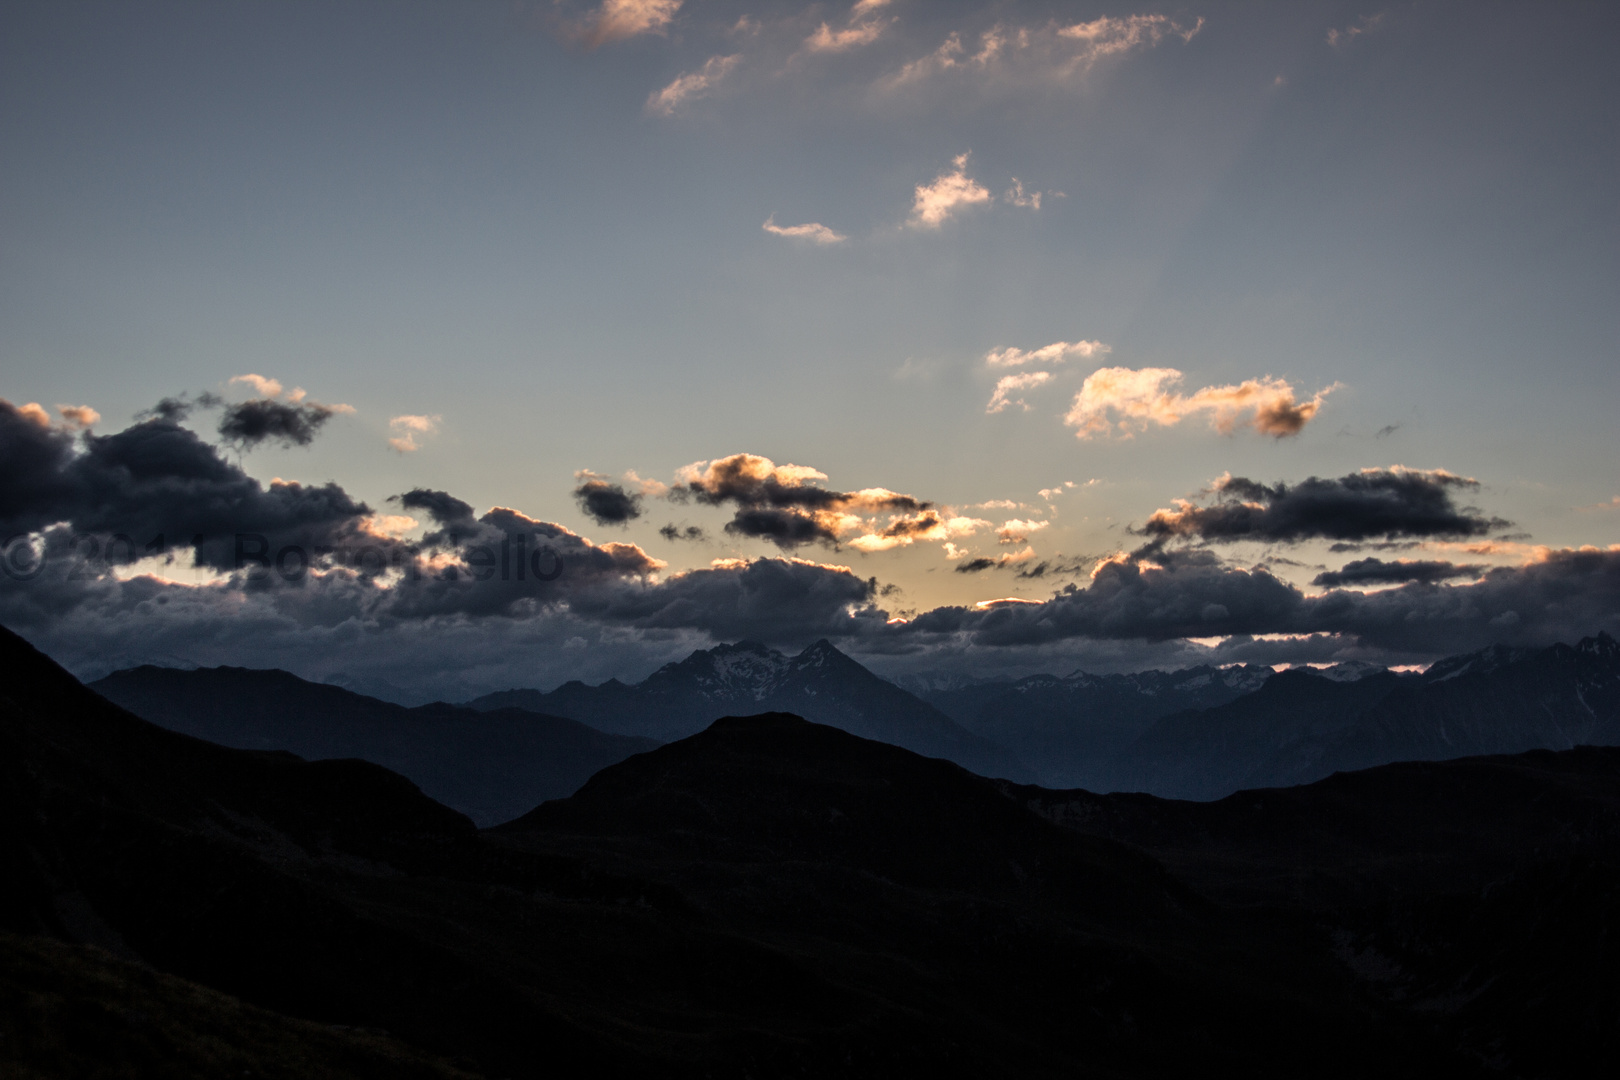 Sonnenaufgang über Südtirol